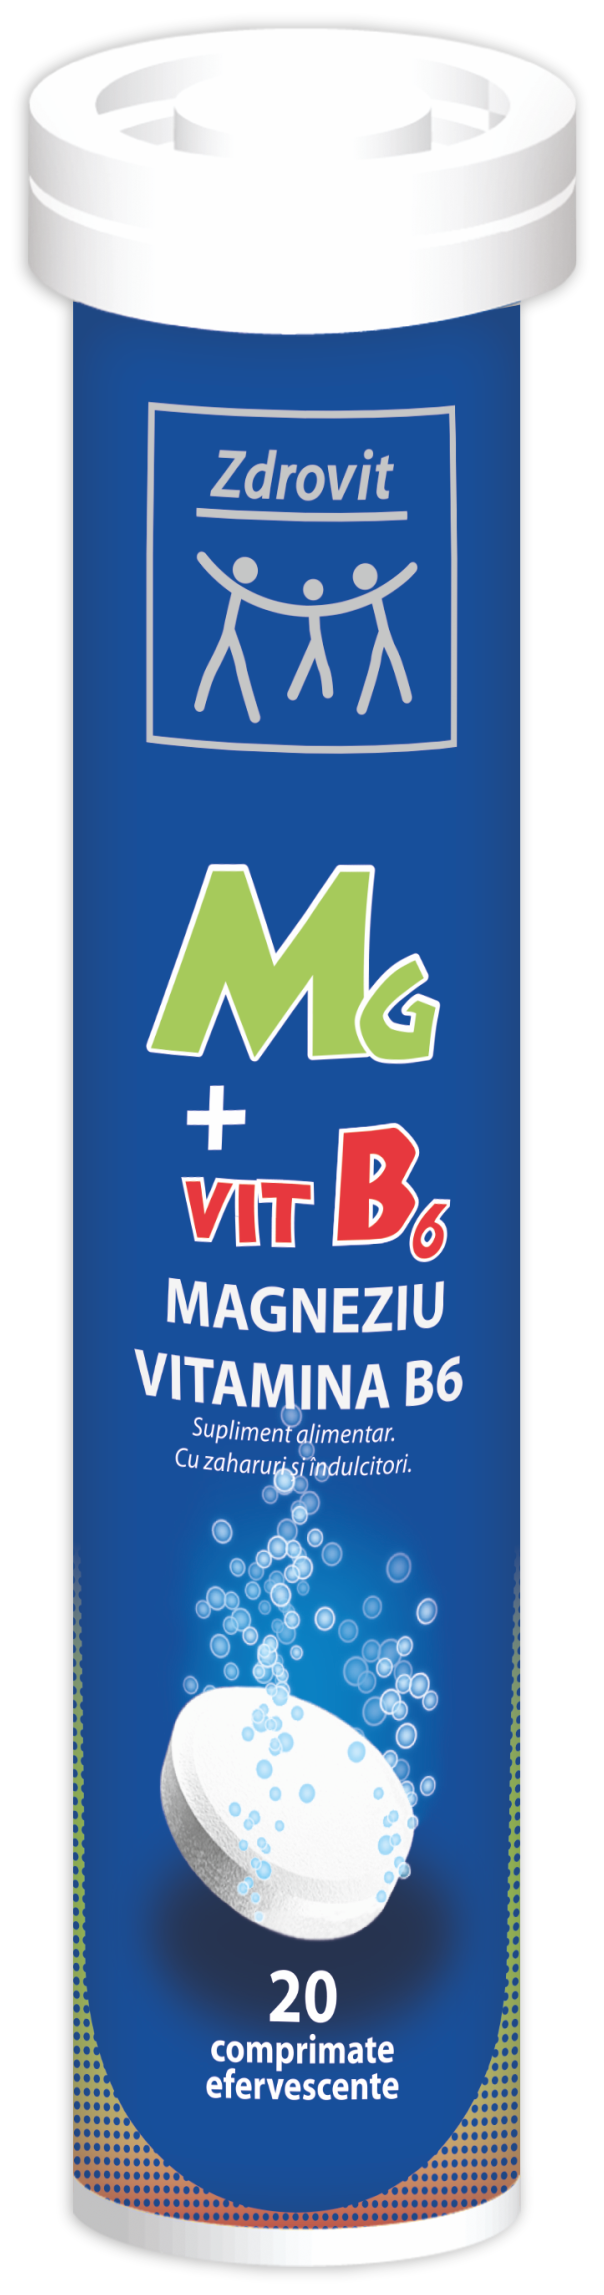 Suplimente cu magneziu - Magneziu+B6 x 20cpr eff (Zdrovit), epastila.ro